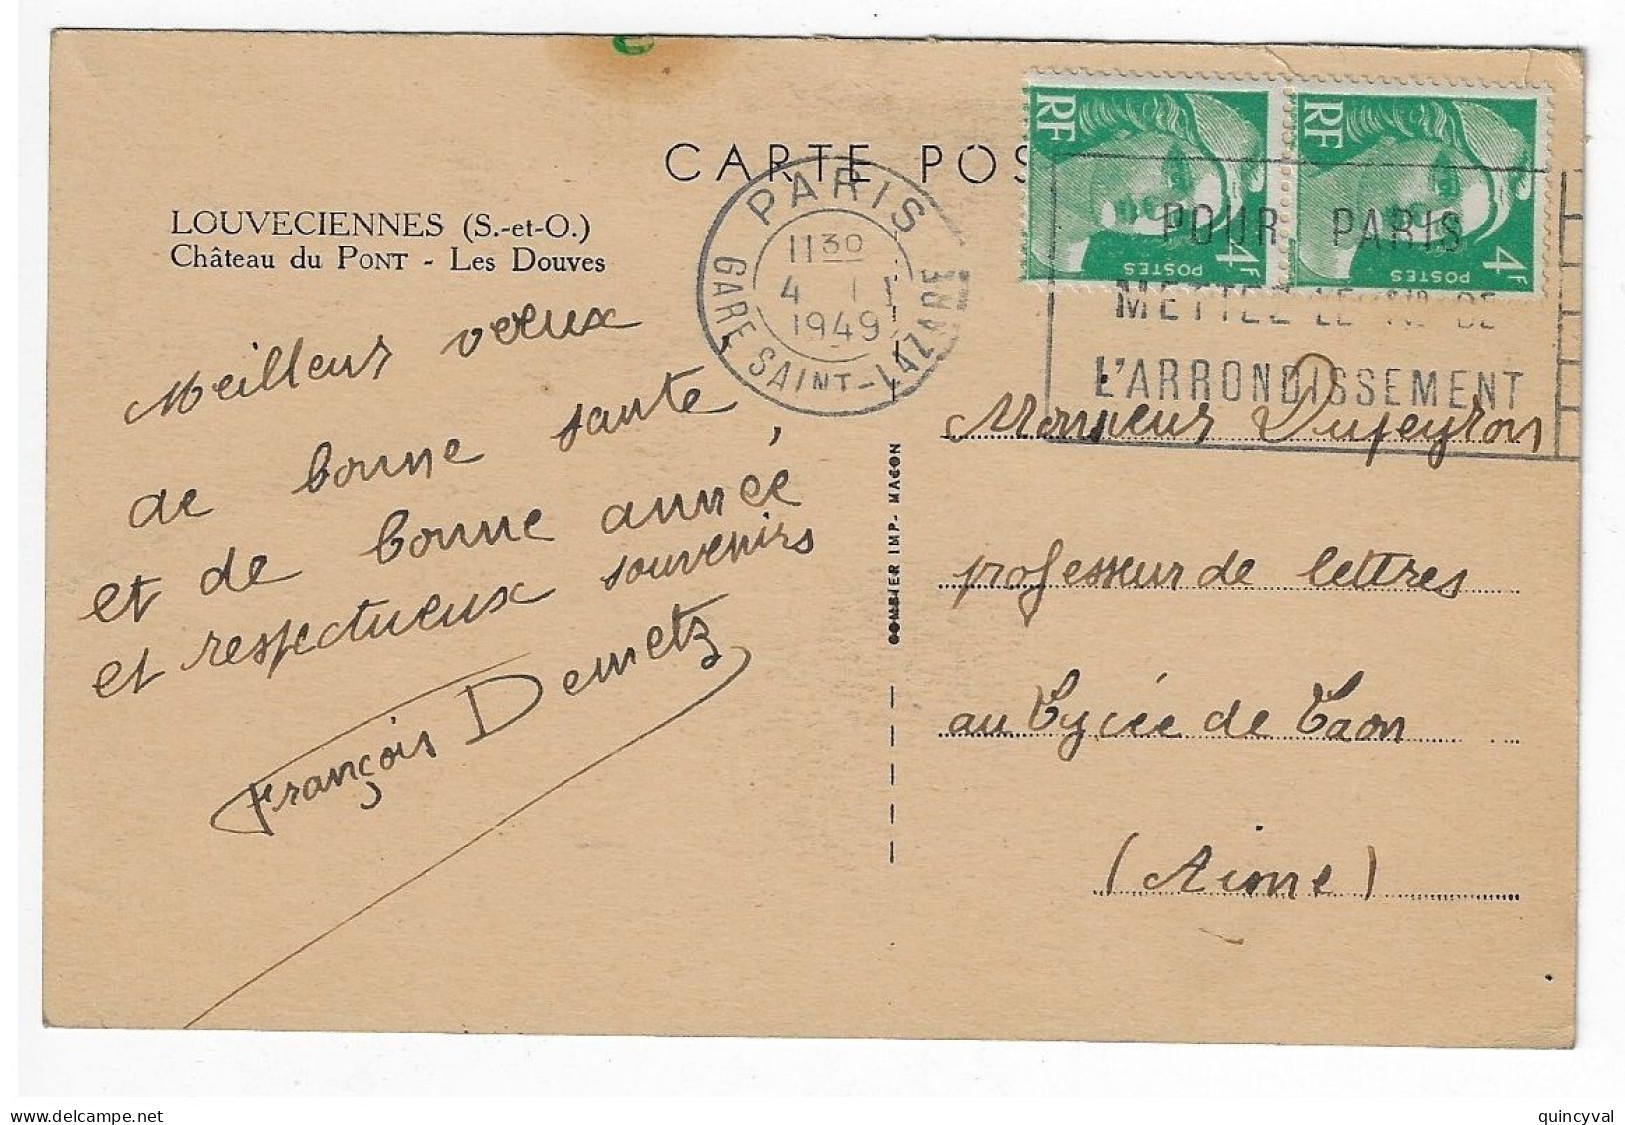 PARIS Gare St Lazare Carte Postale 4 F Gandon Vert Emeraude X 2 Ob Meca 4 1 1949 - 1945-54 Marianna Di Gandon